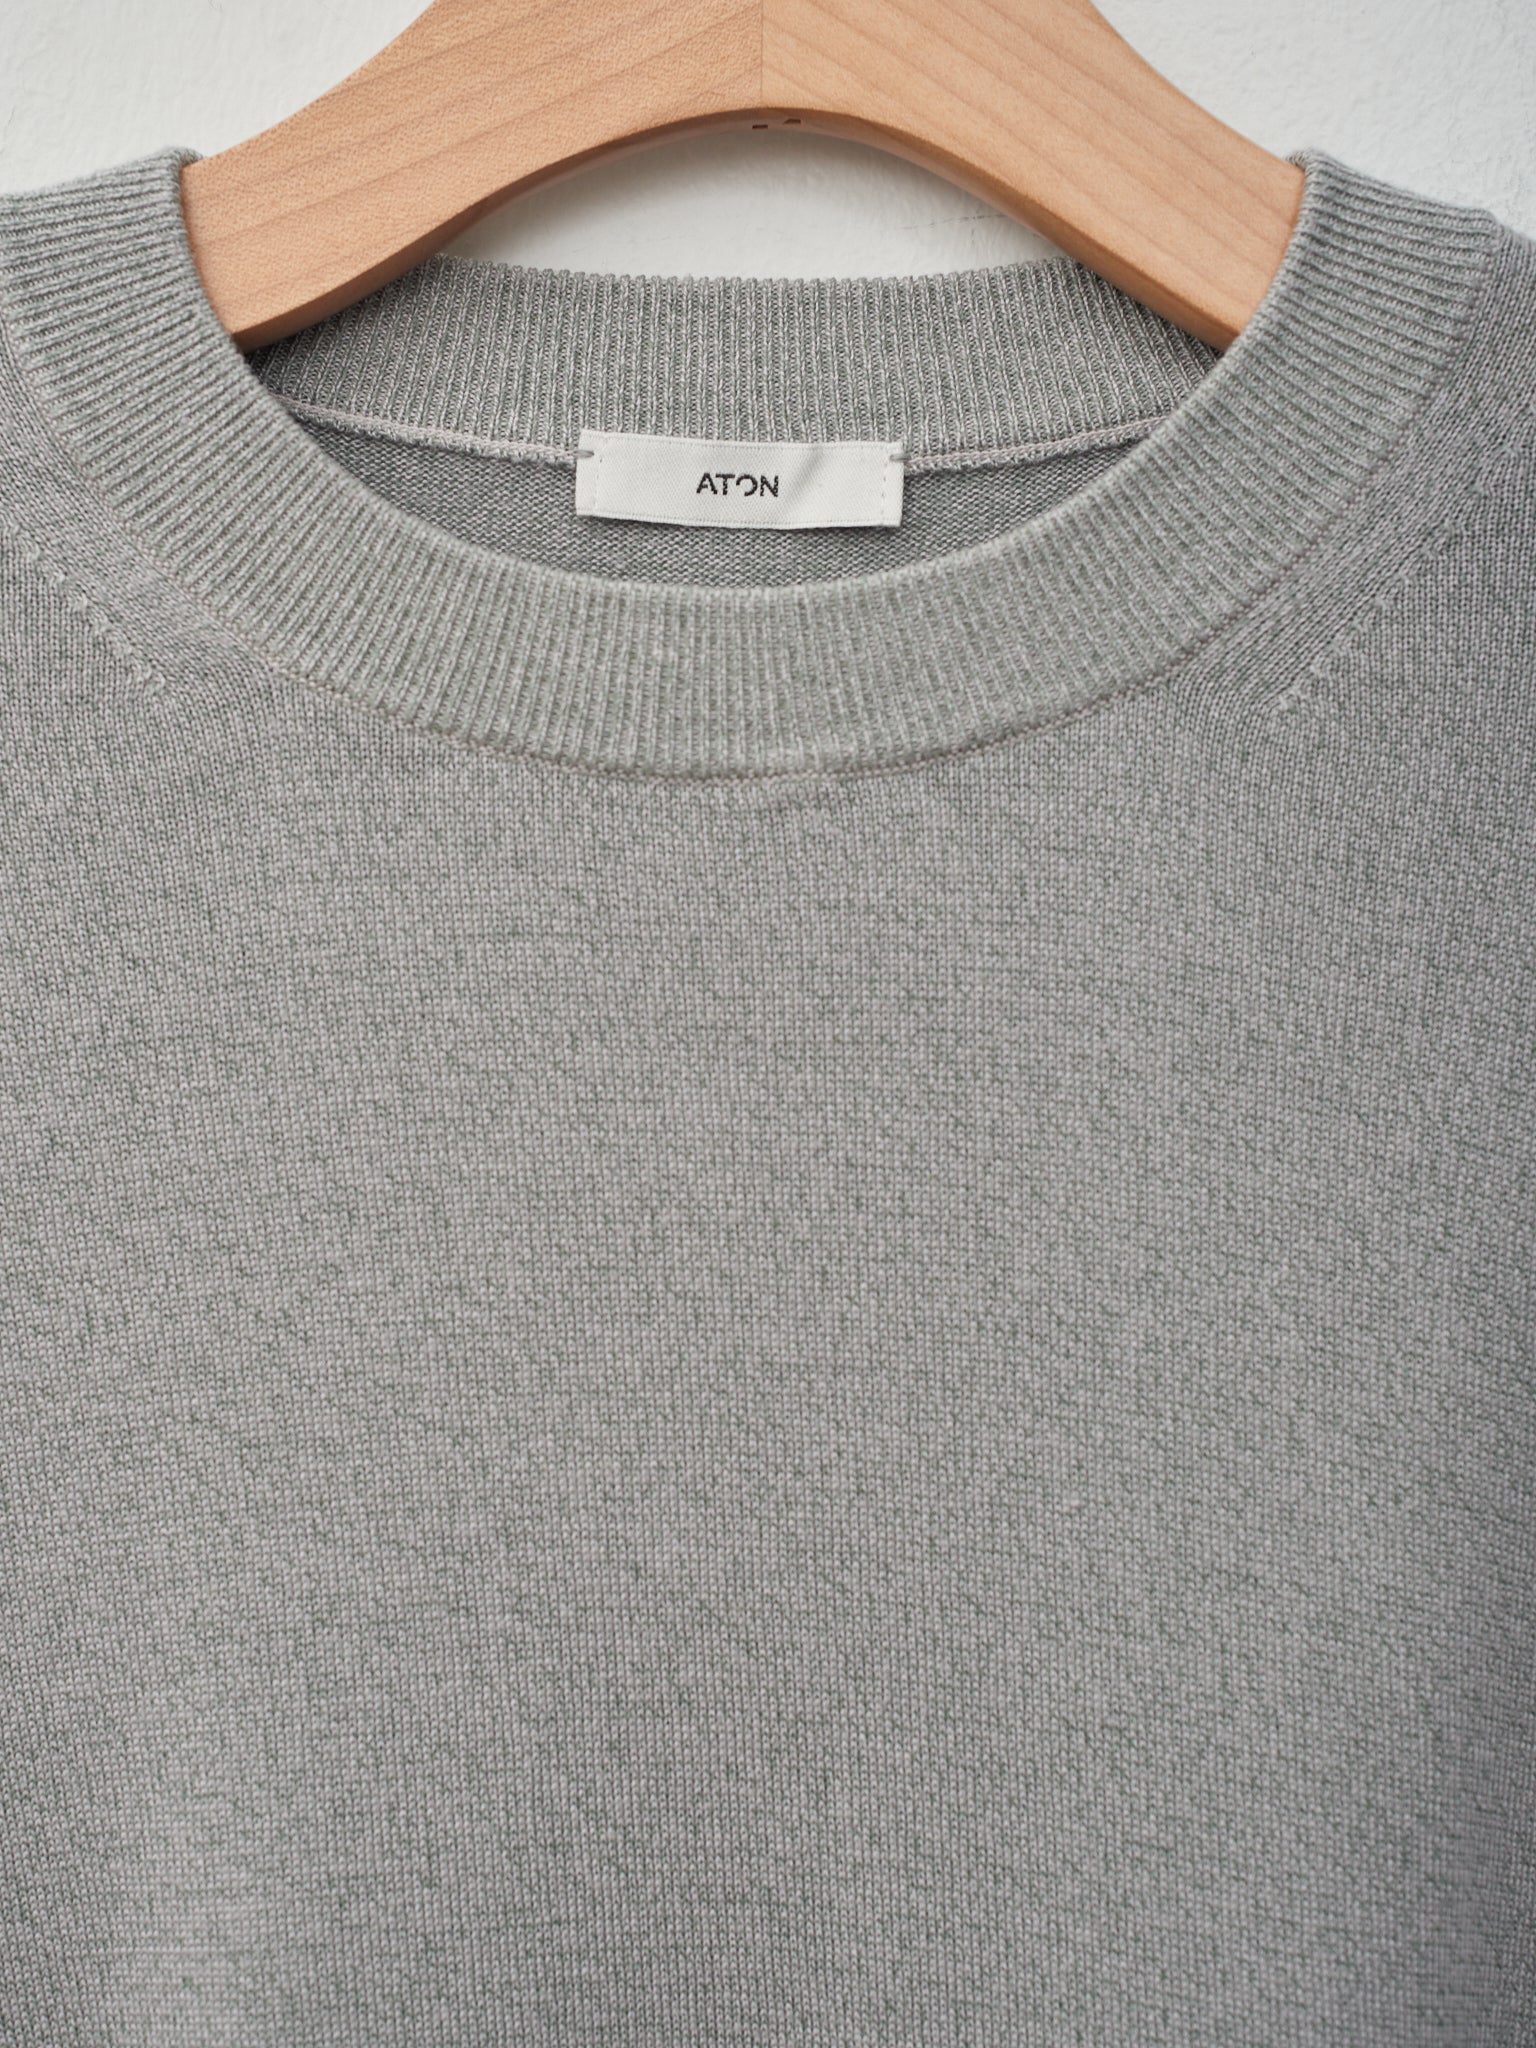 Namu Shop - Aton Garment Dyed Silk Washi Crewneck Sweater - Gray